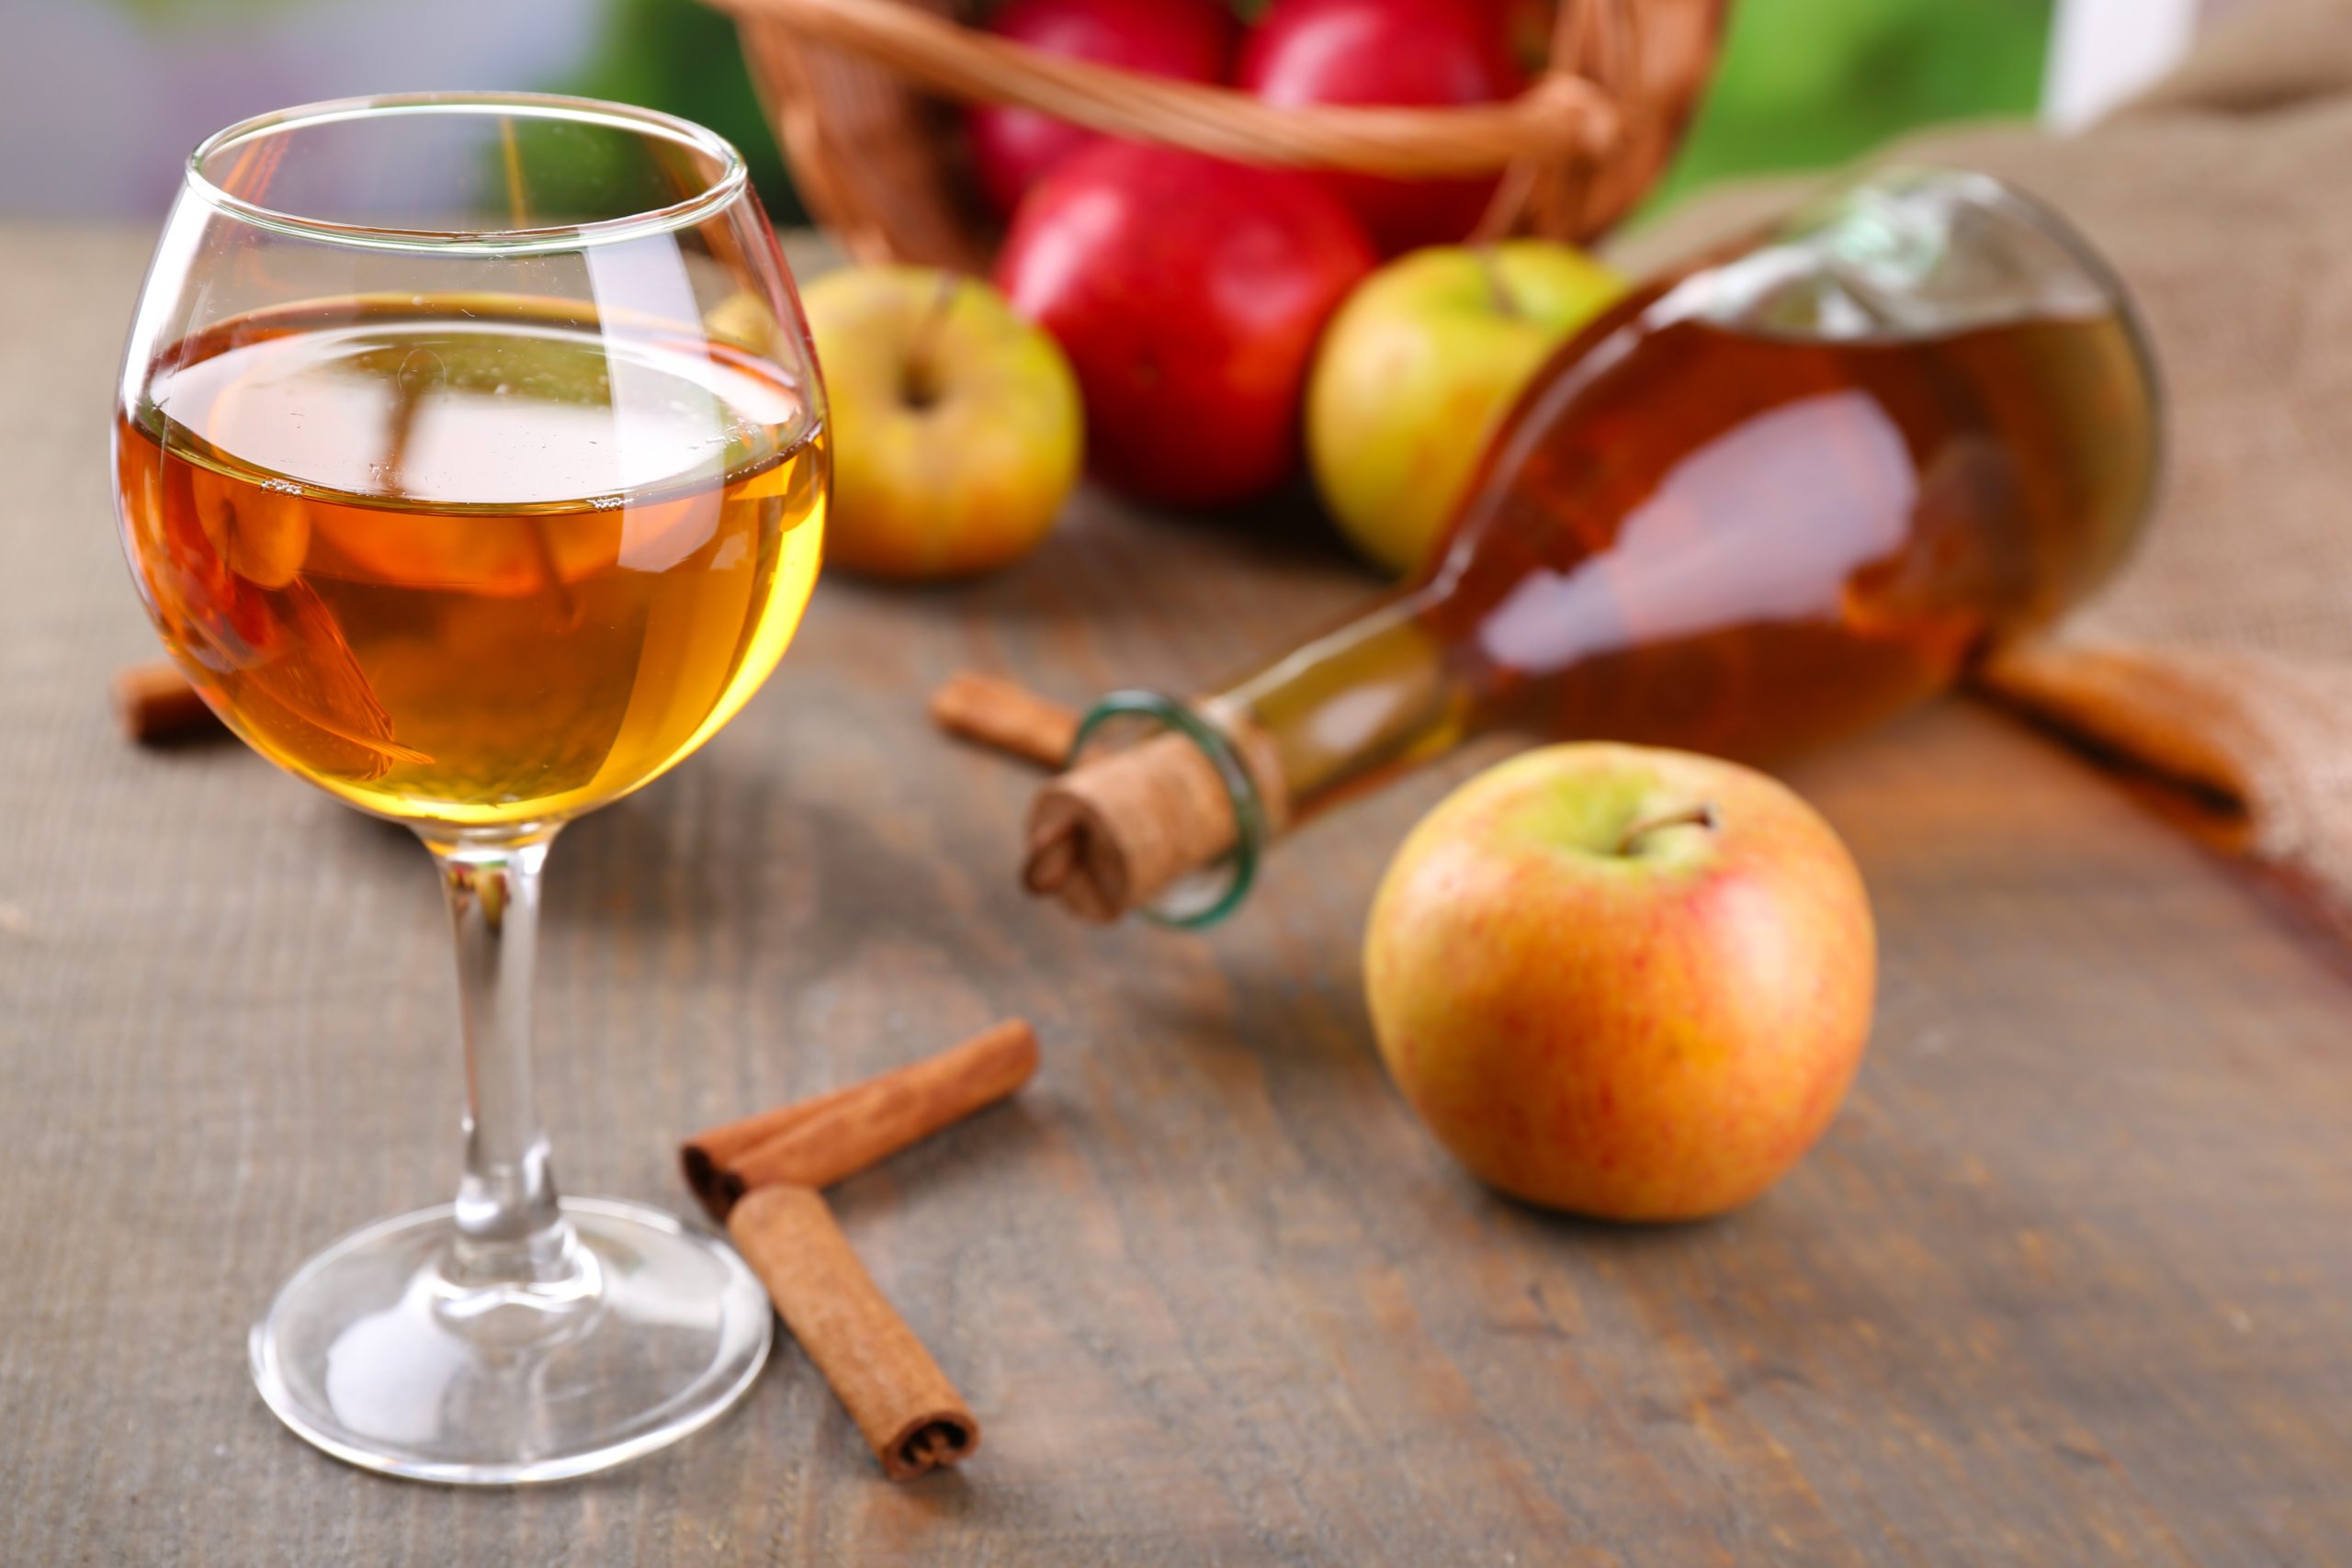 How To Make Apple Wine